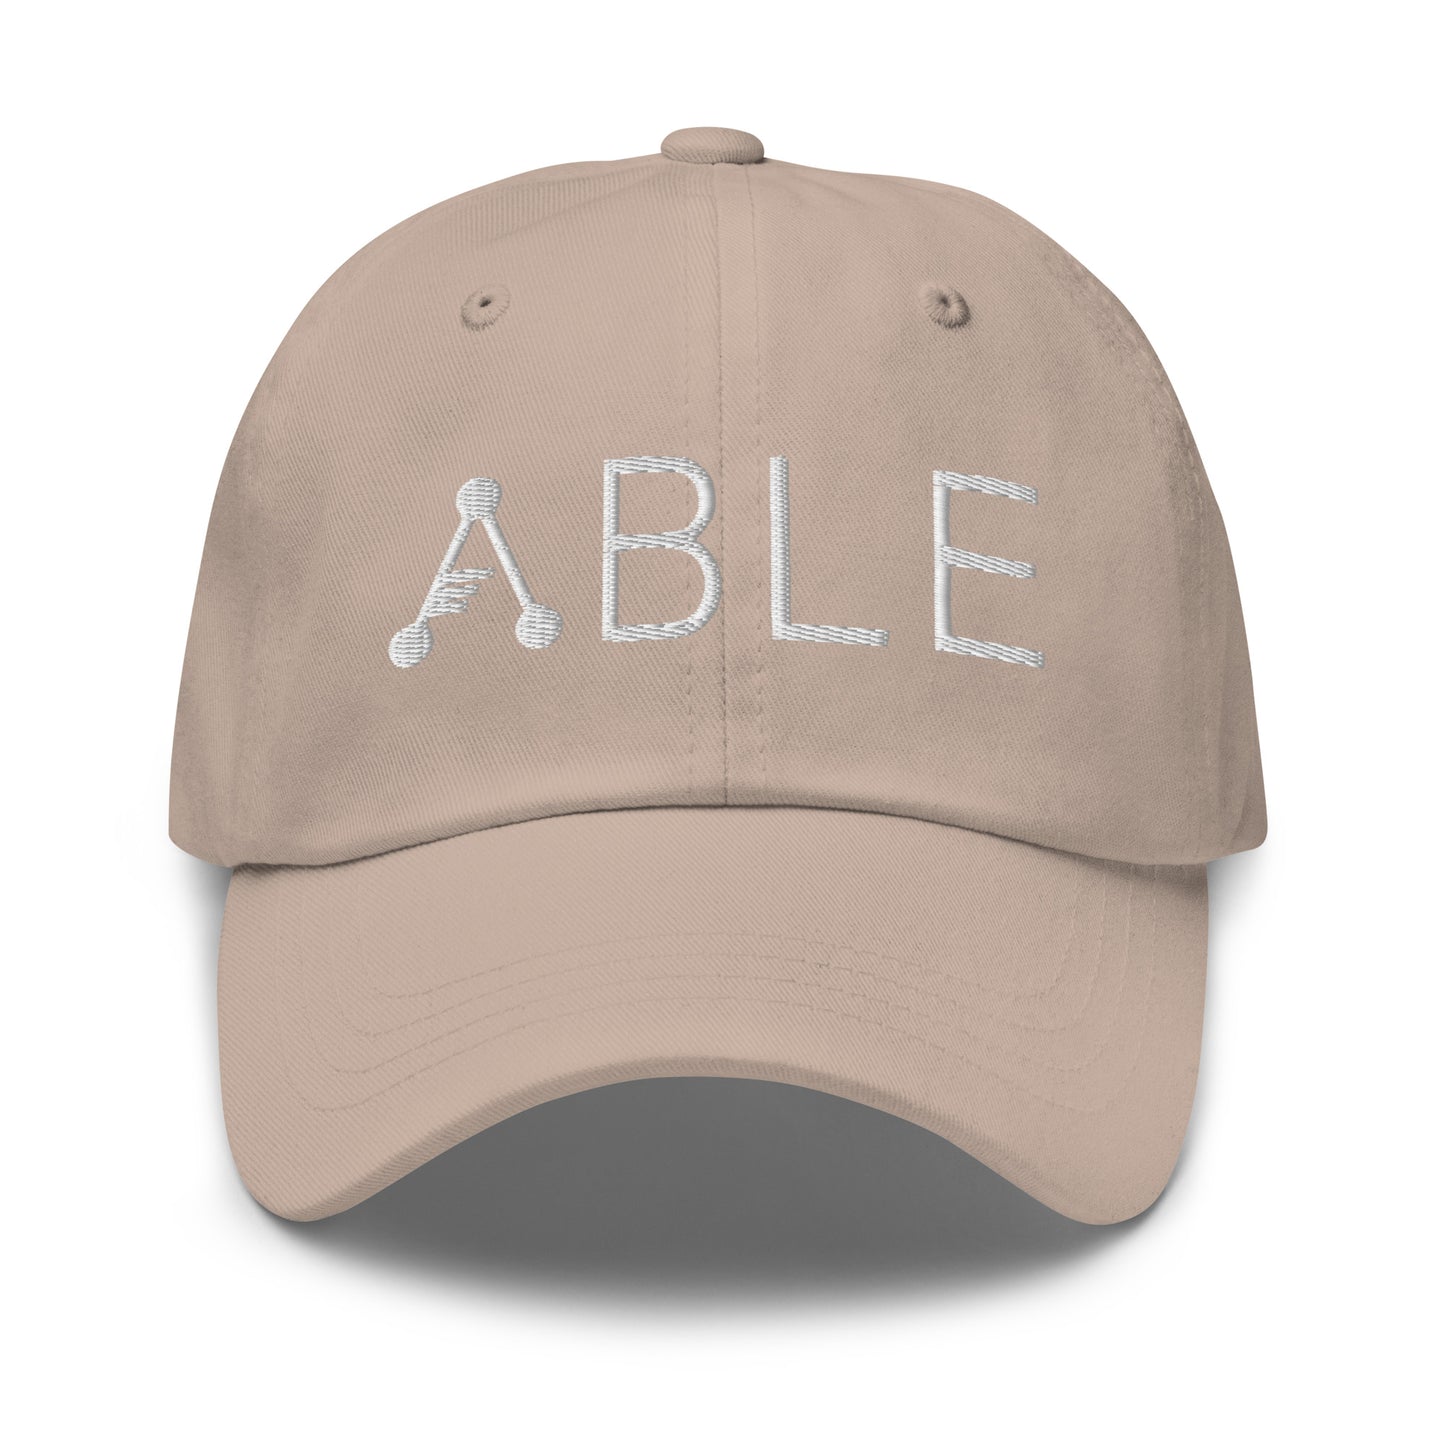 ABLE's Baseball Hat